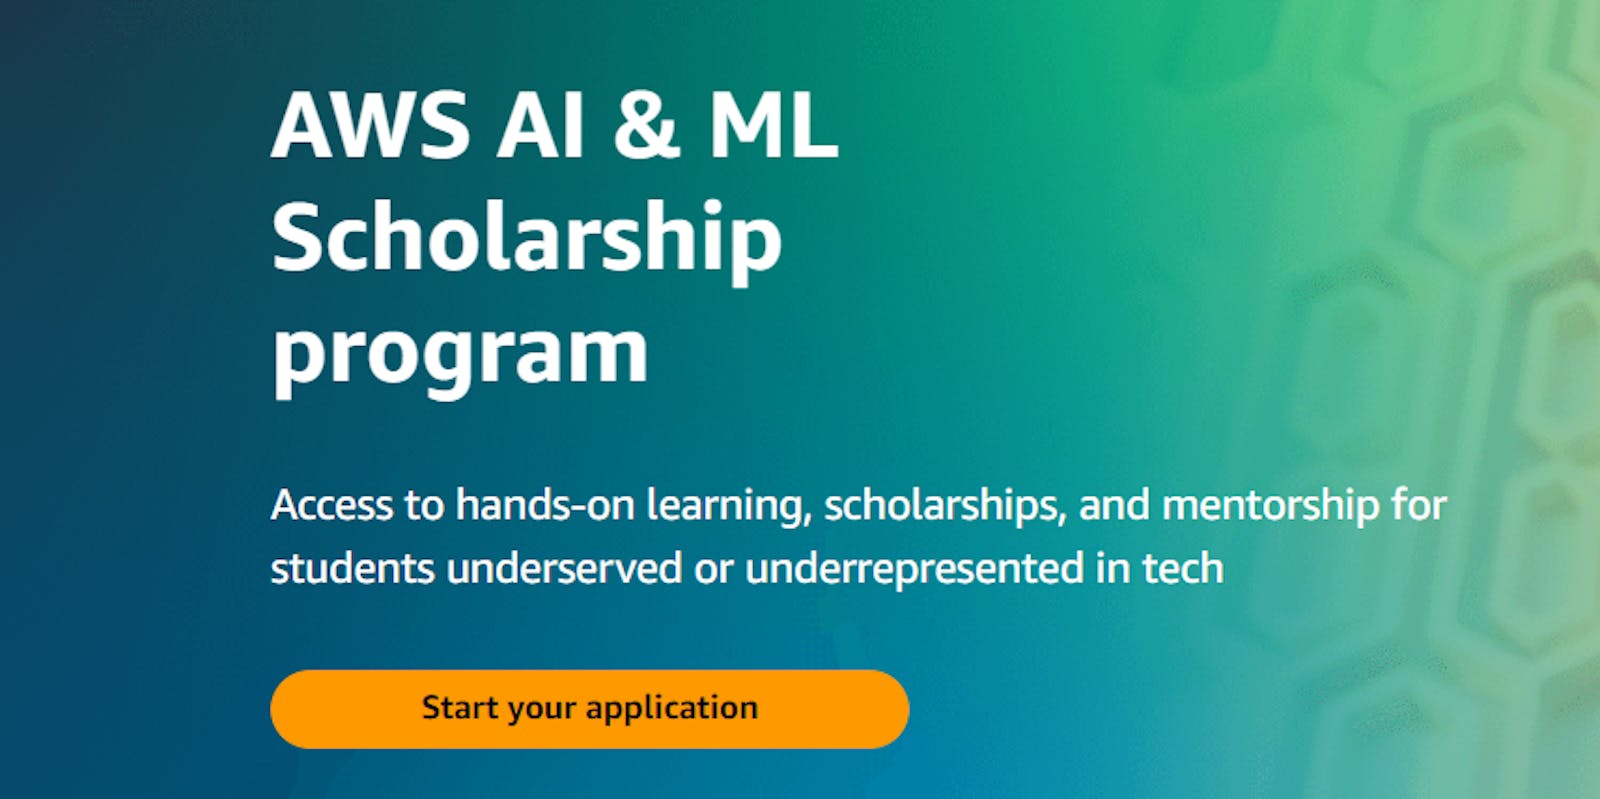 AWS AI & ML Scholarship - Everything you need to know